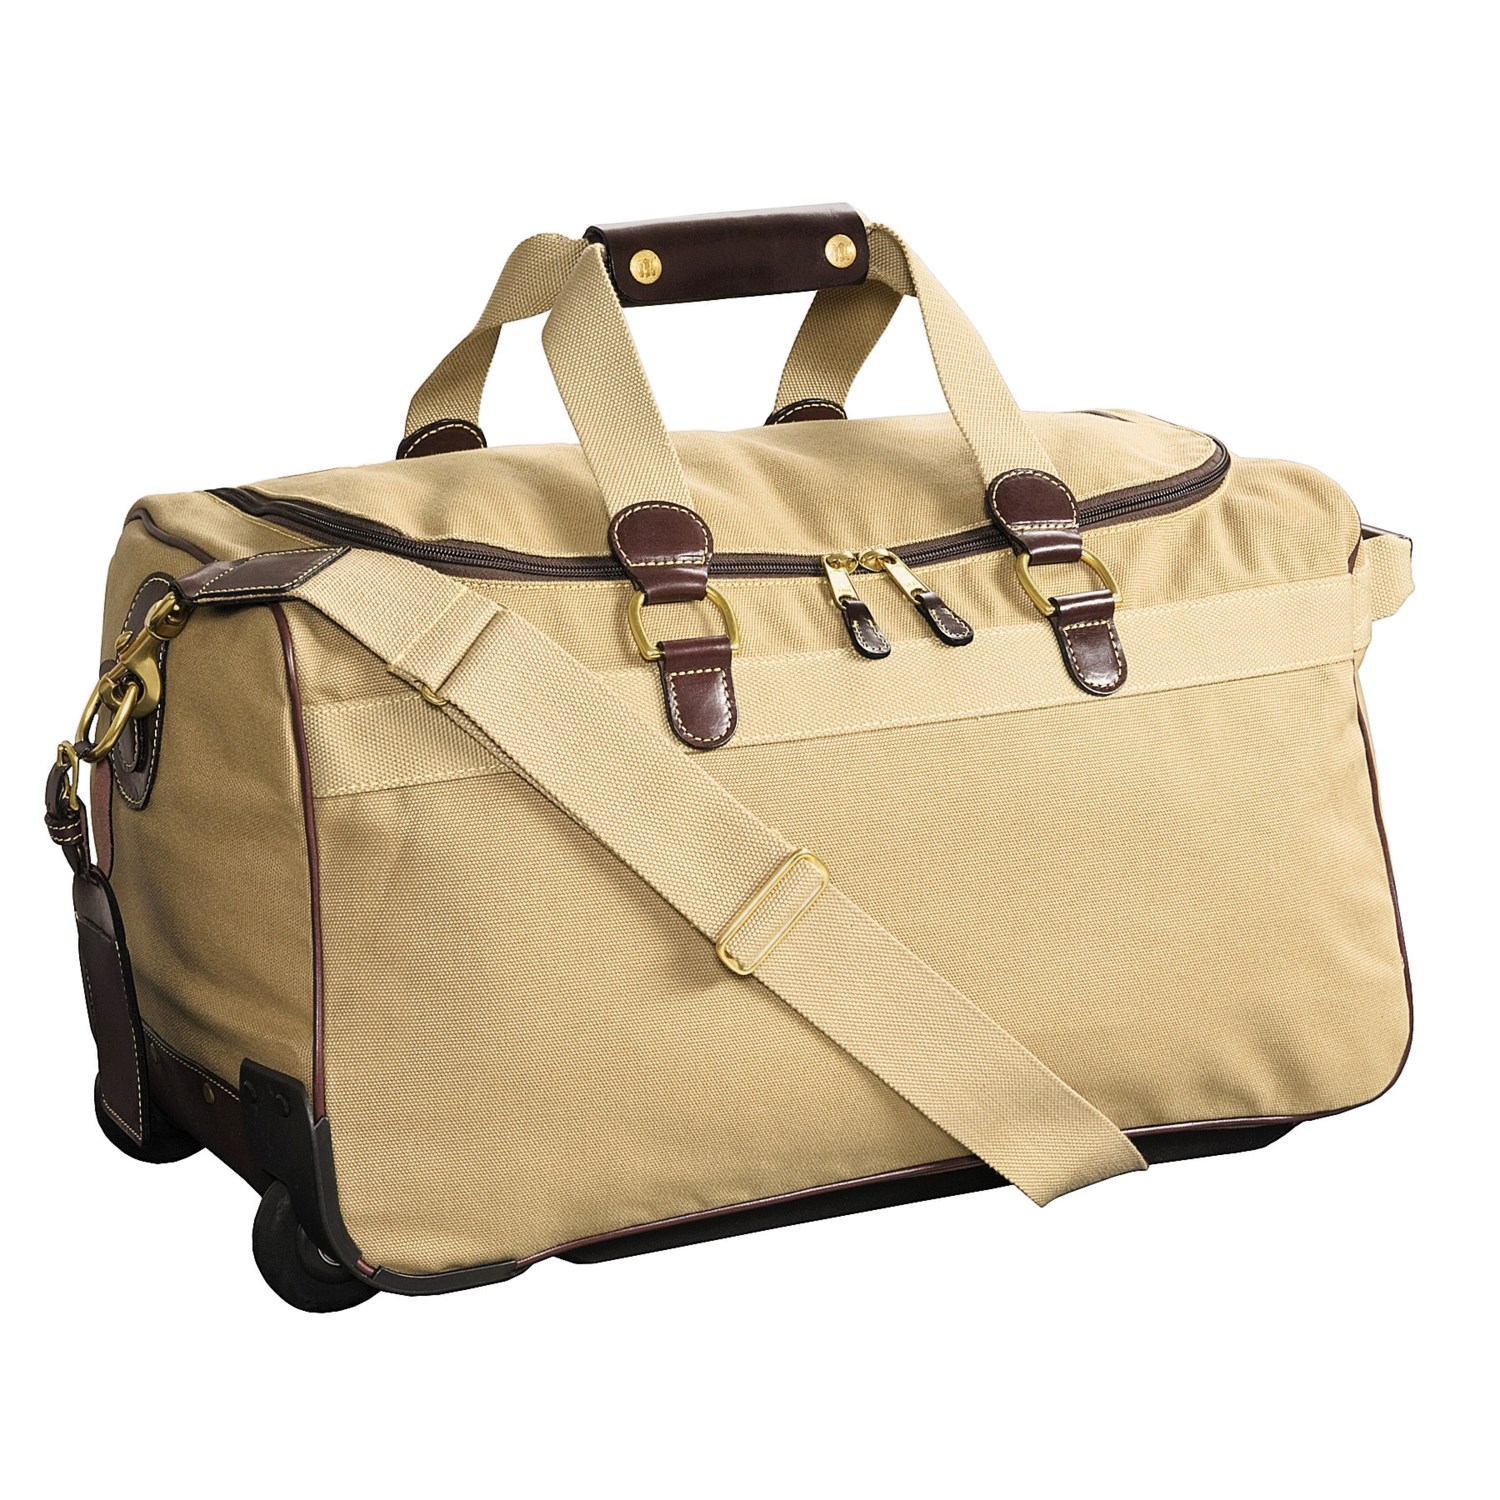 Mulholland Brothers Luggage Medium Rolling Duffel Bag - Canvas 80919 - Save 42%